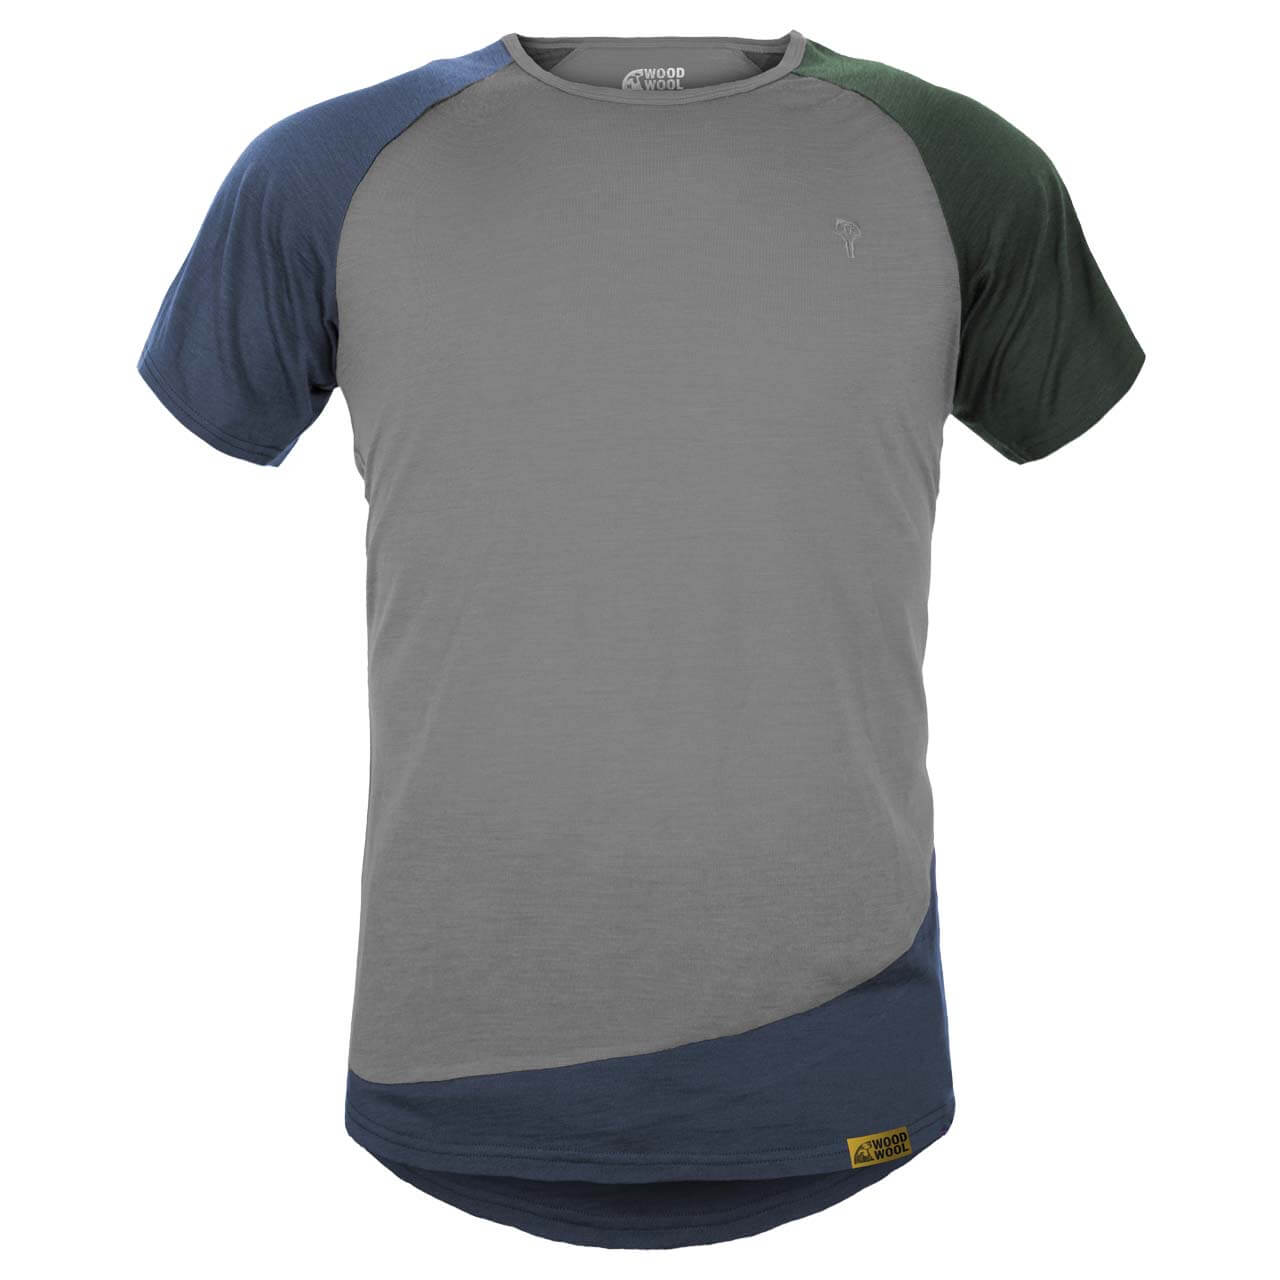 Grüezi Bag WoodWool T-Shirt Mr. Kirk - Slate Grey, L